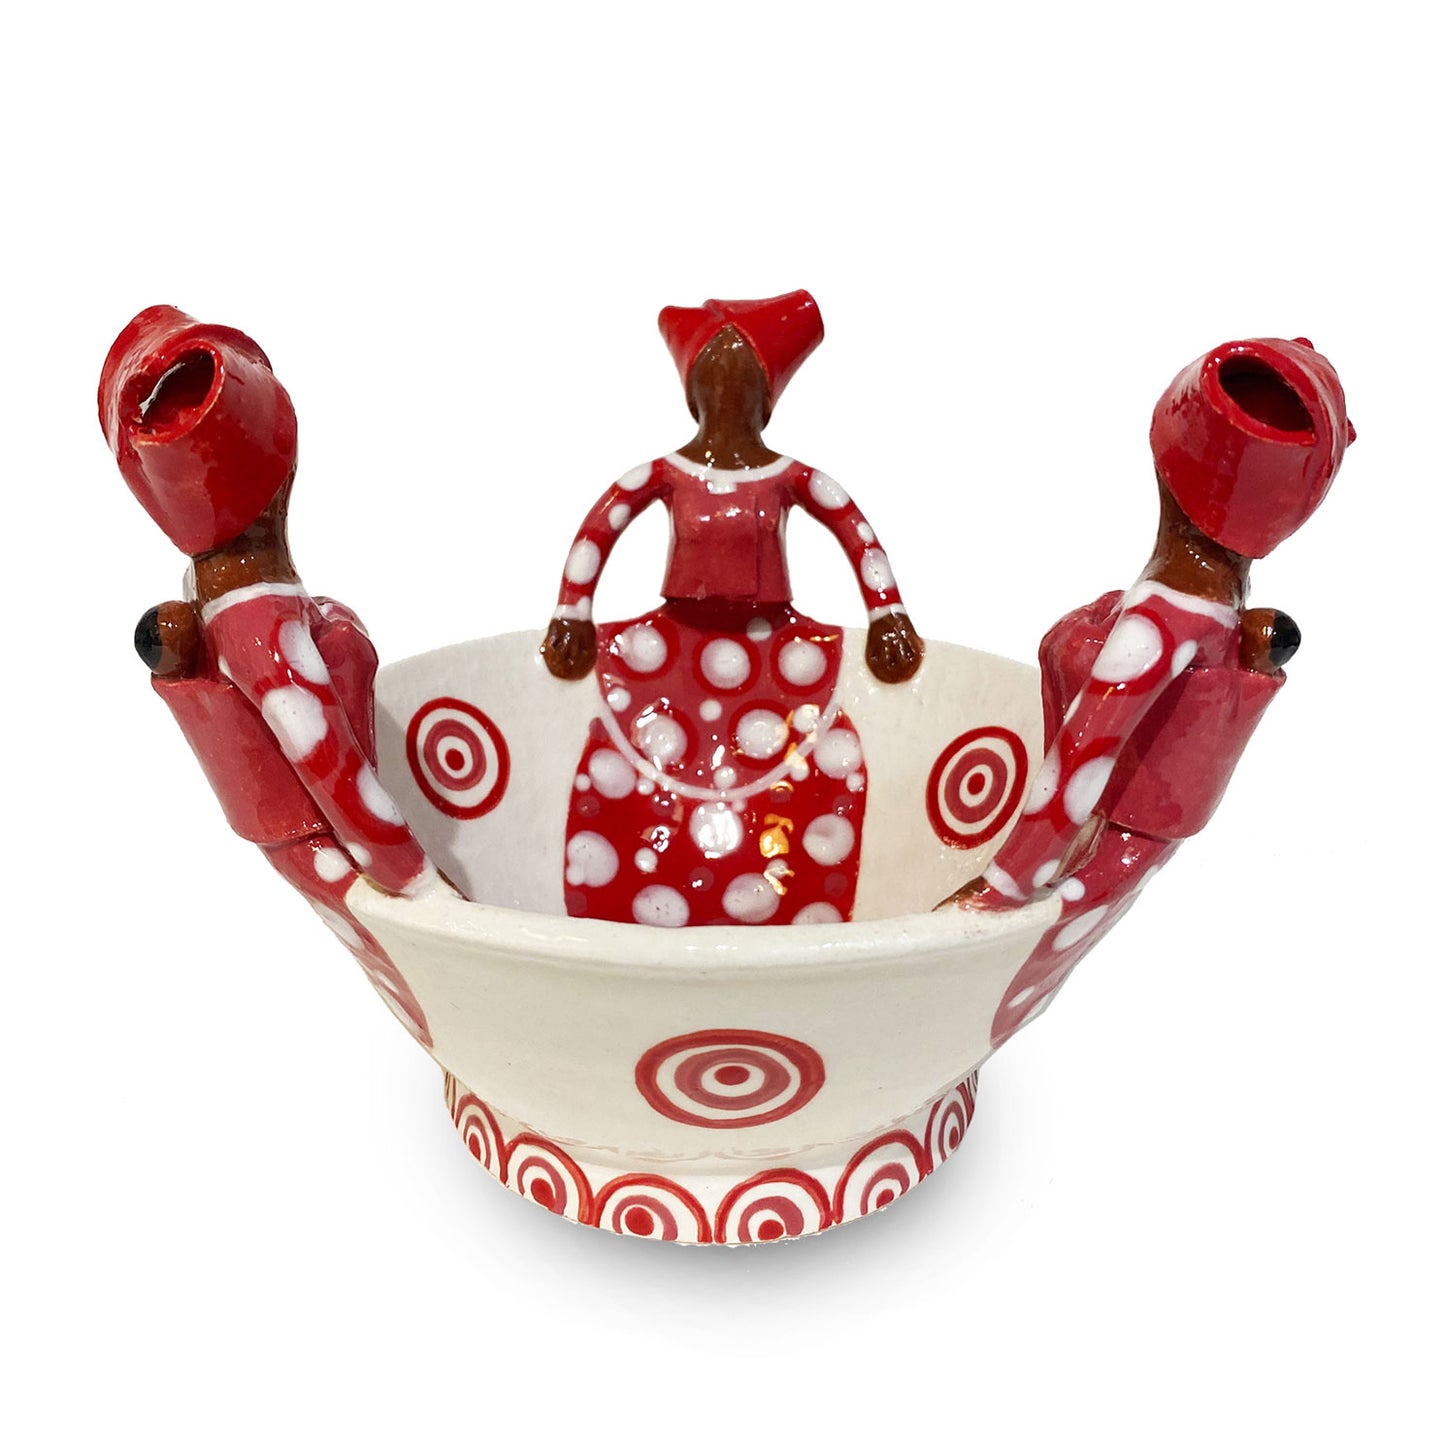 Zizamele ceramics ciotola 3 donne rossa